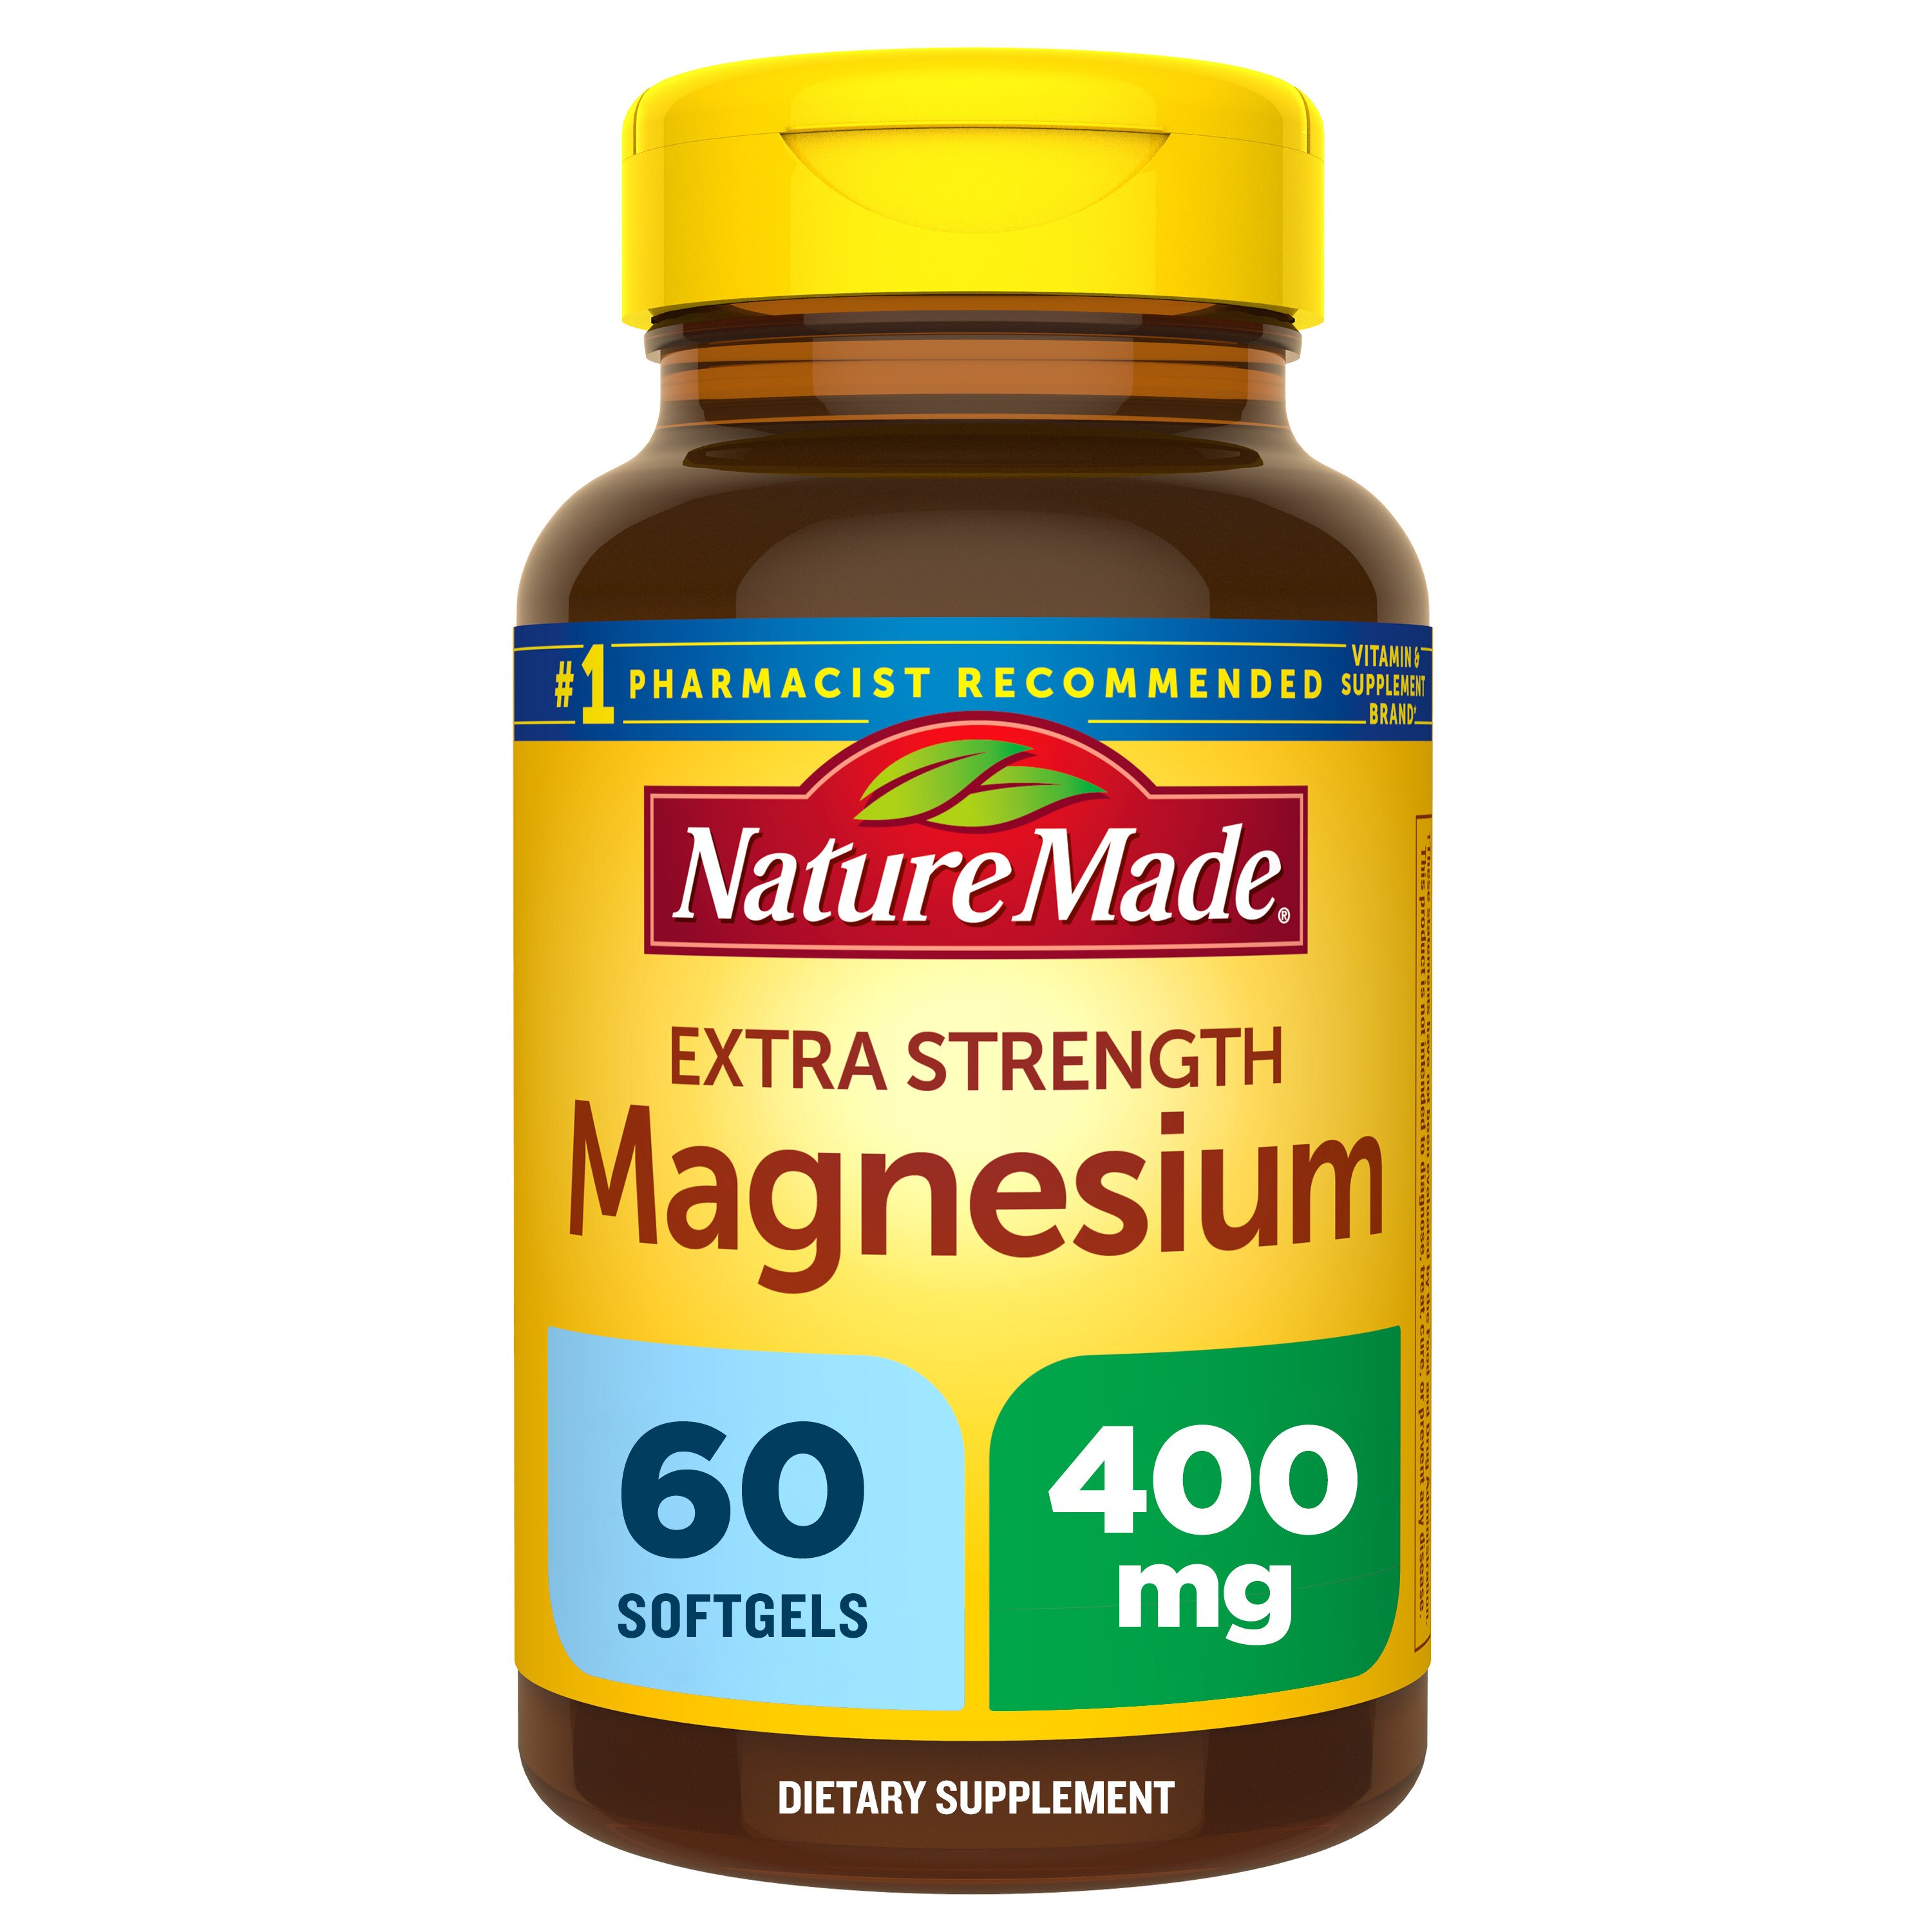 Nature Made Extra Strength Magnesium Oxide 400 mg Softgels, 60 CT